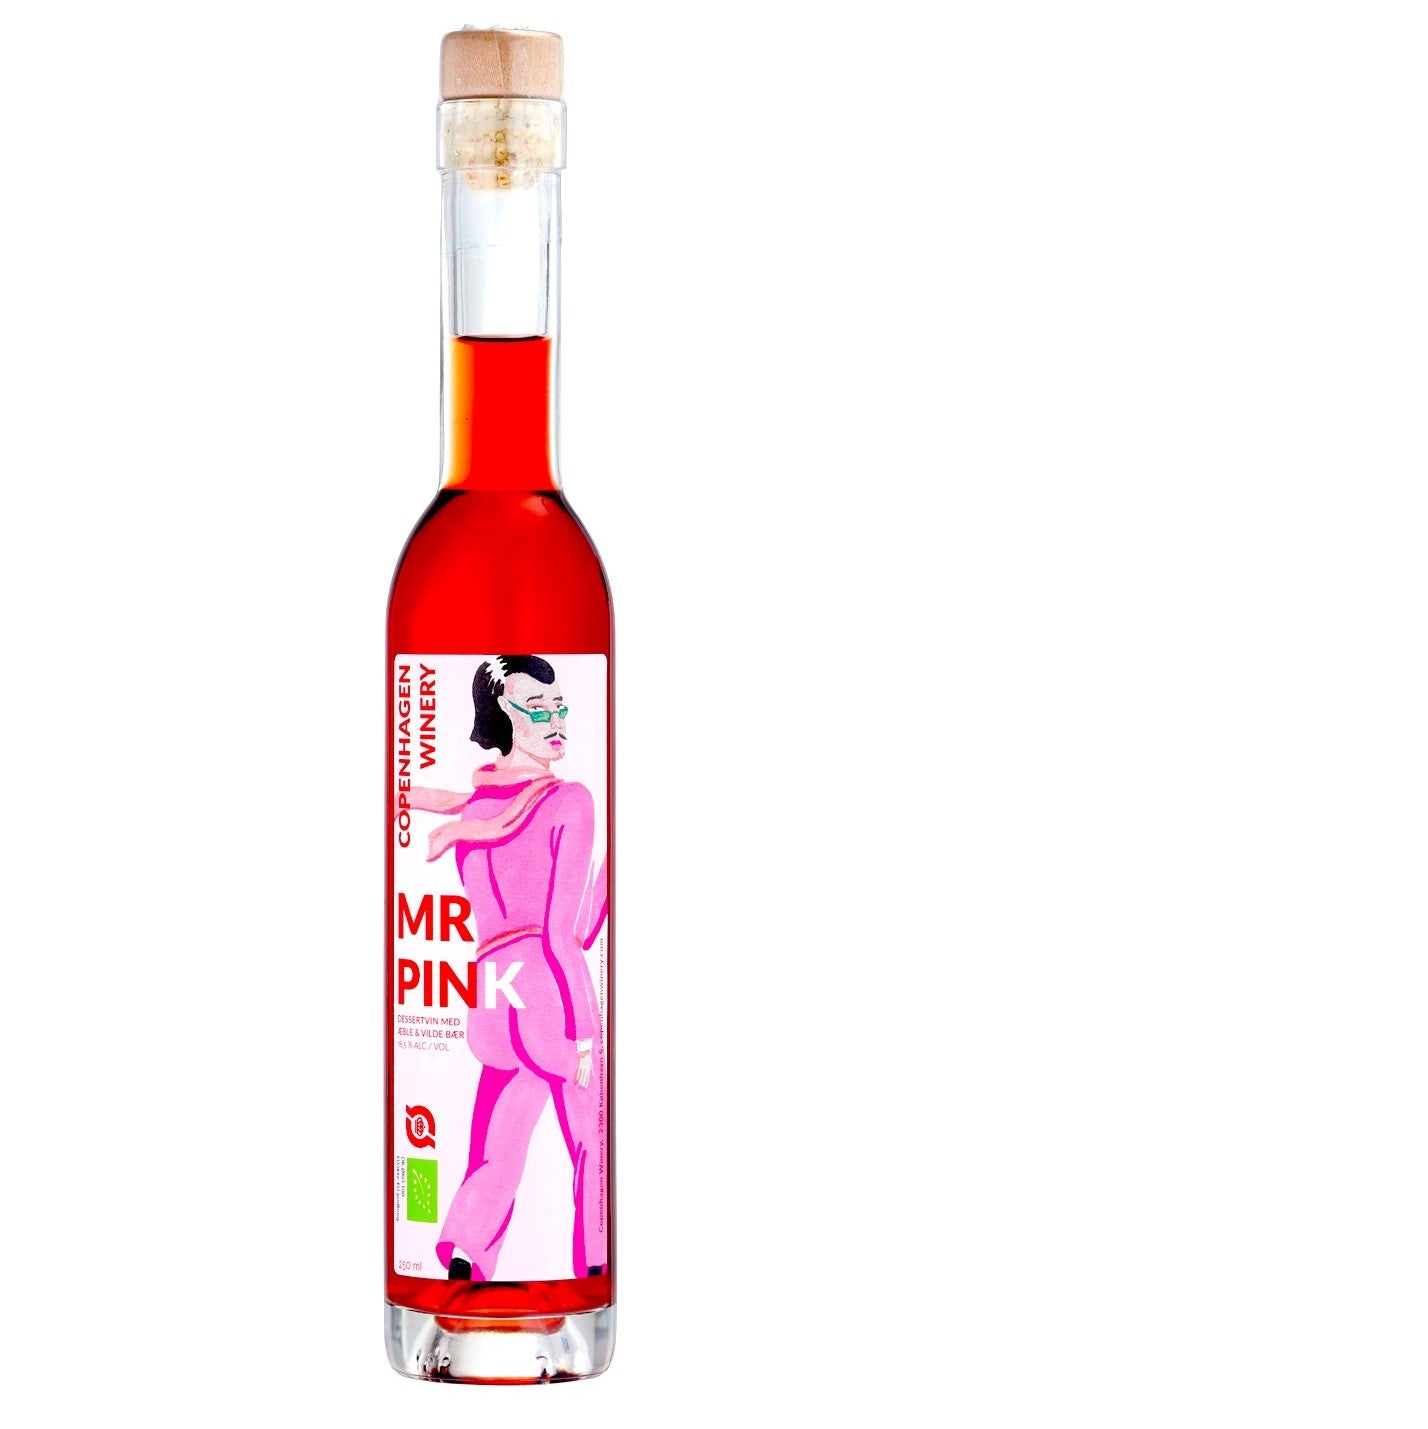 Copenhagen Winery - Mr Pink 18,5% alc